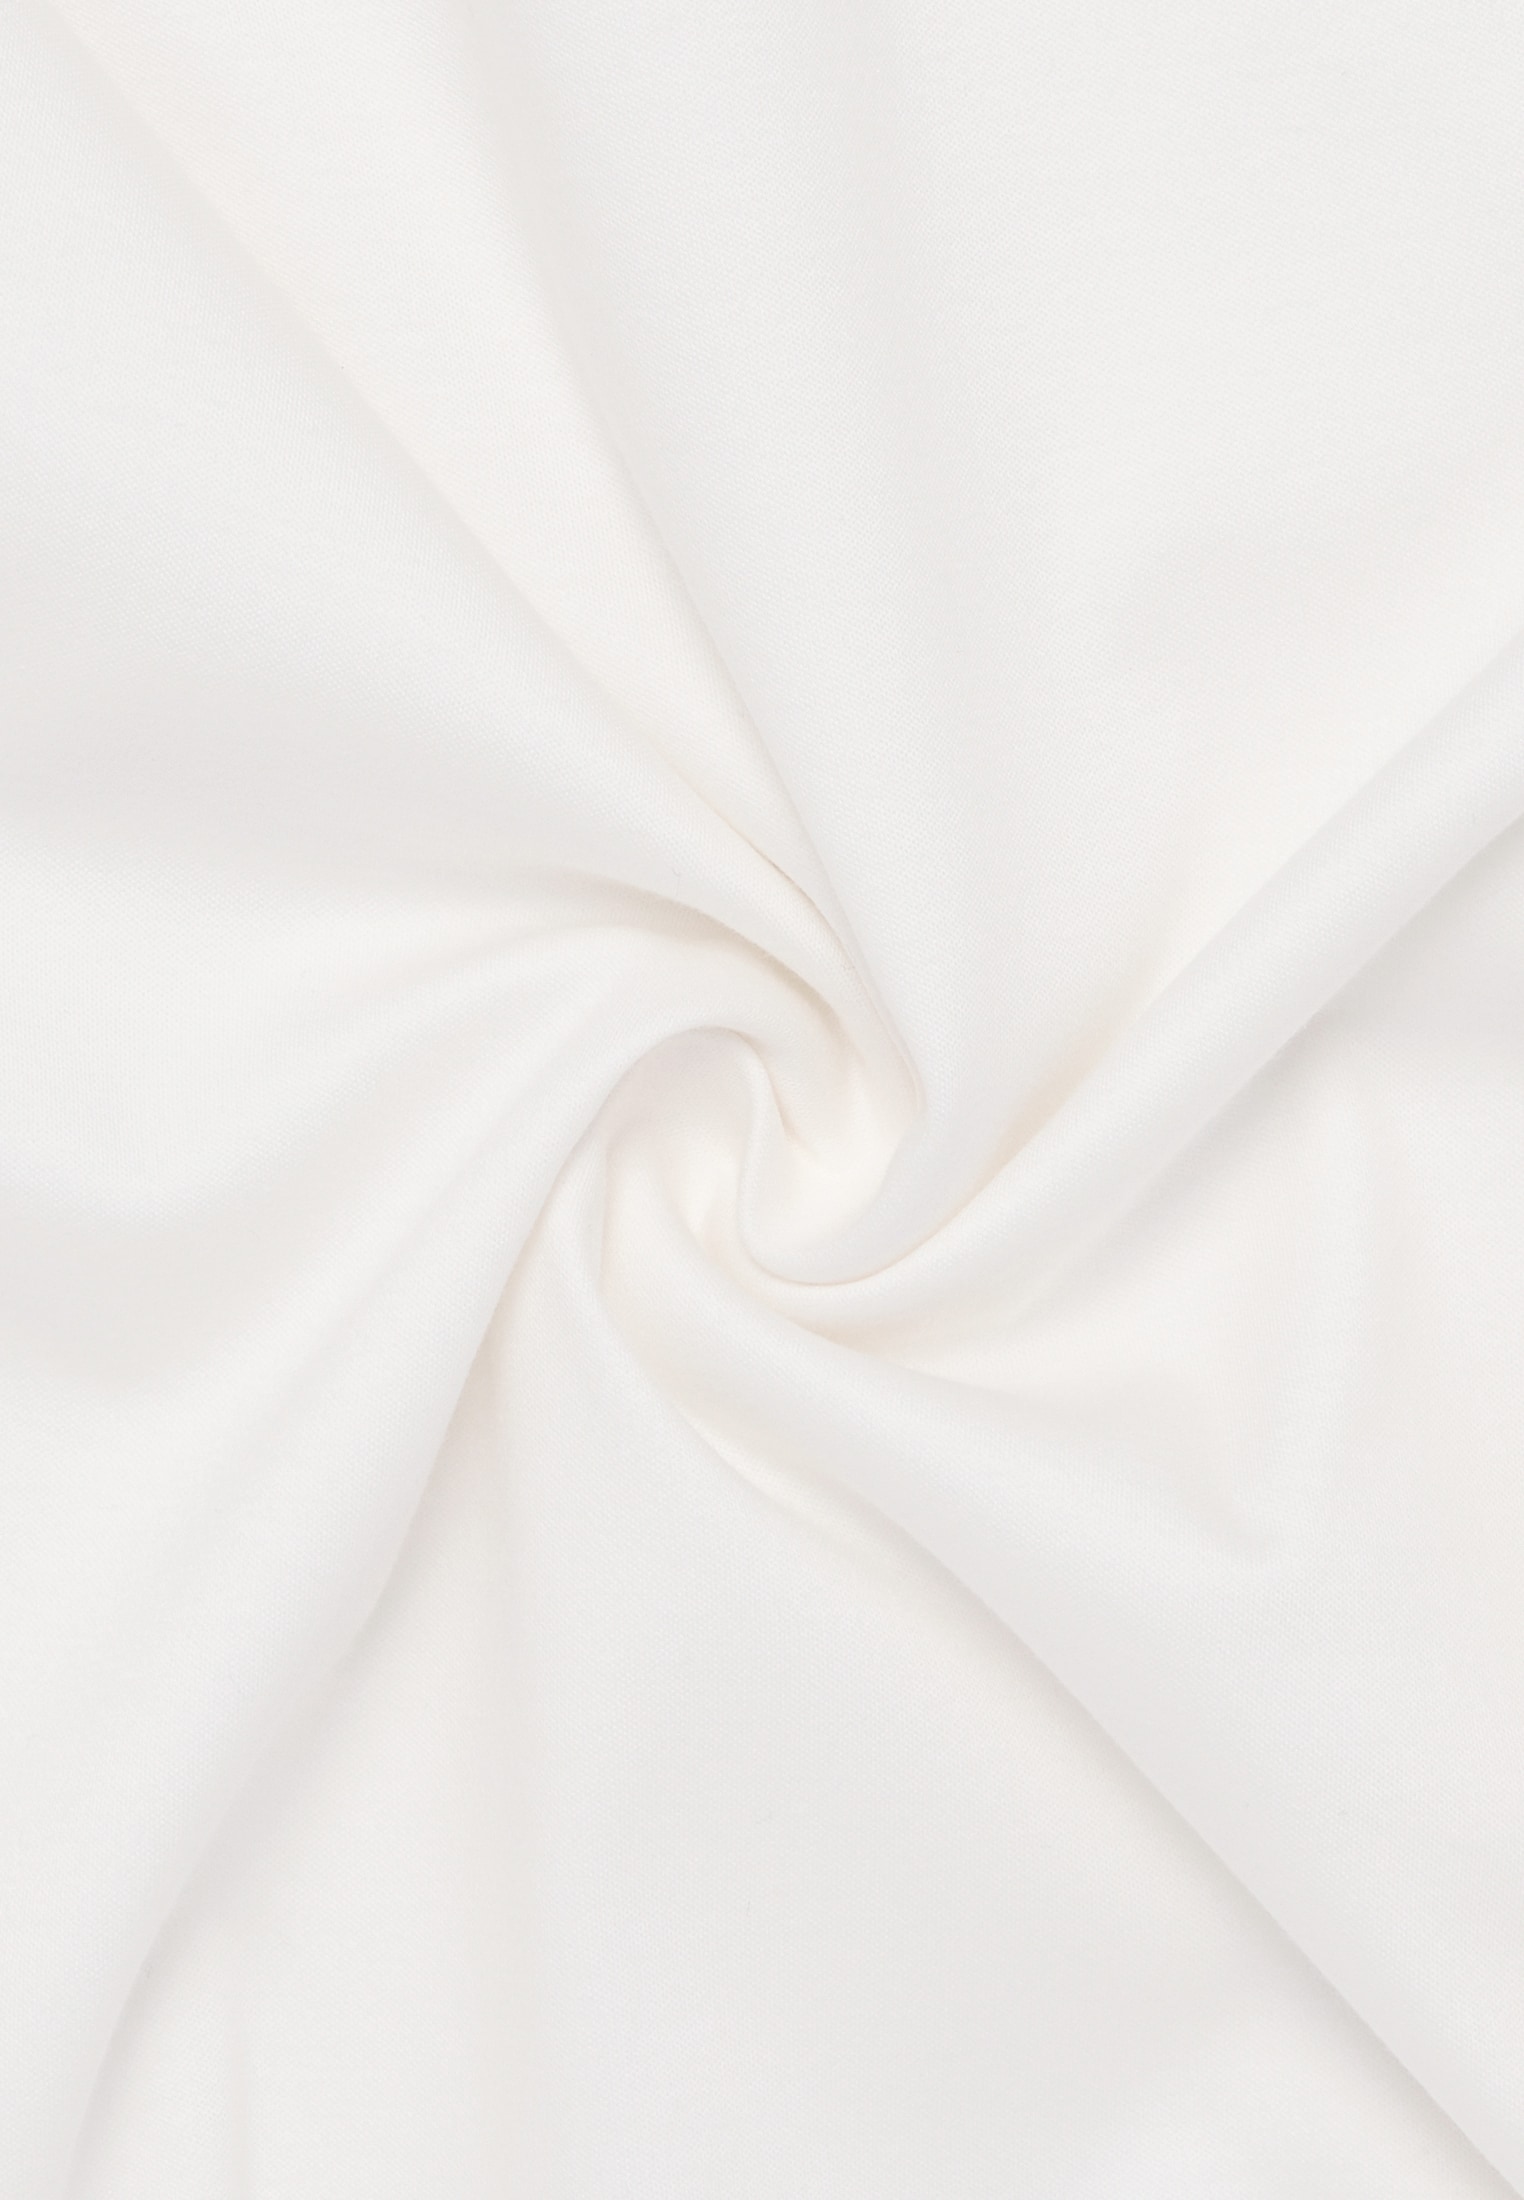 Viscose Shirt Bluse in off-white unifarben | off-white | 46 | 3/4-Arm |  2BL04358-00-02-46-3/4 | Blusenshirts